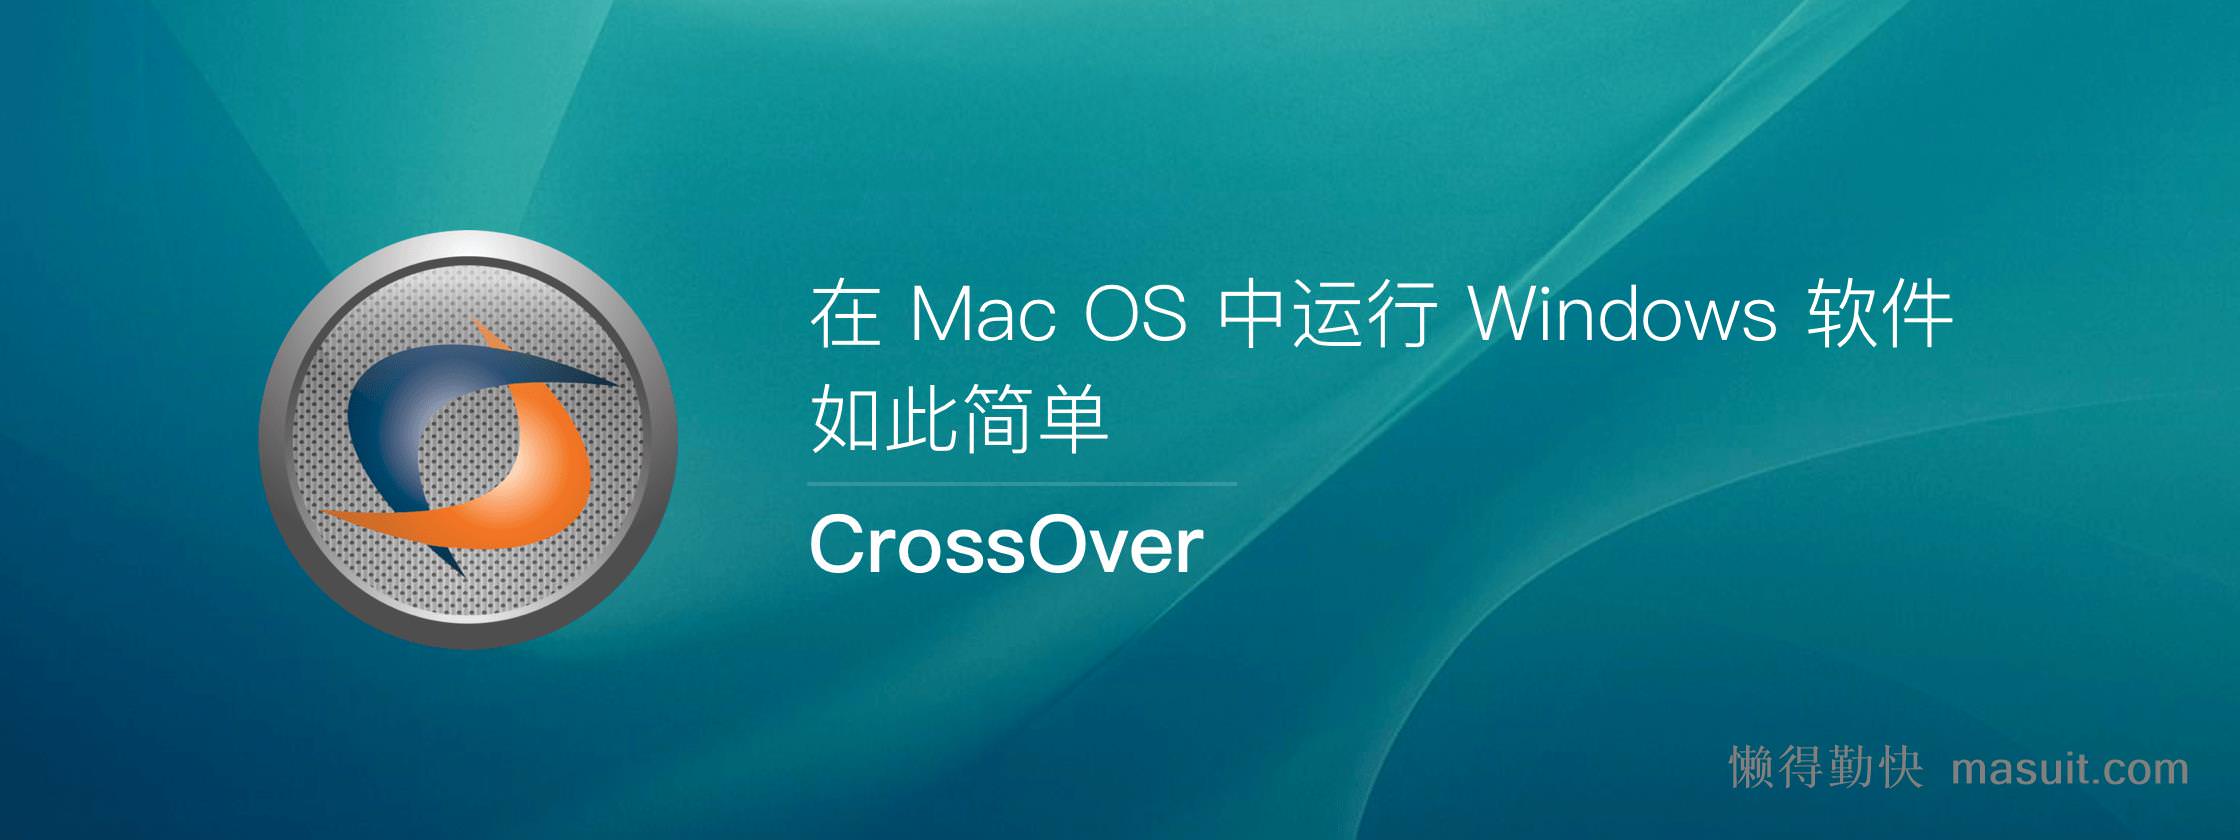 crossover for mac microsoft net framework 4